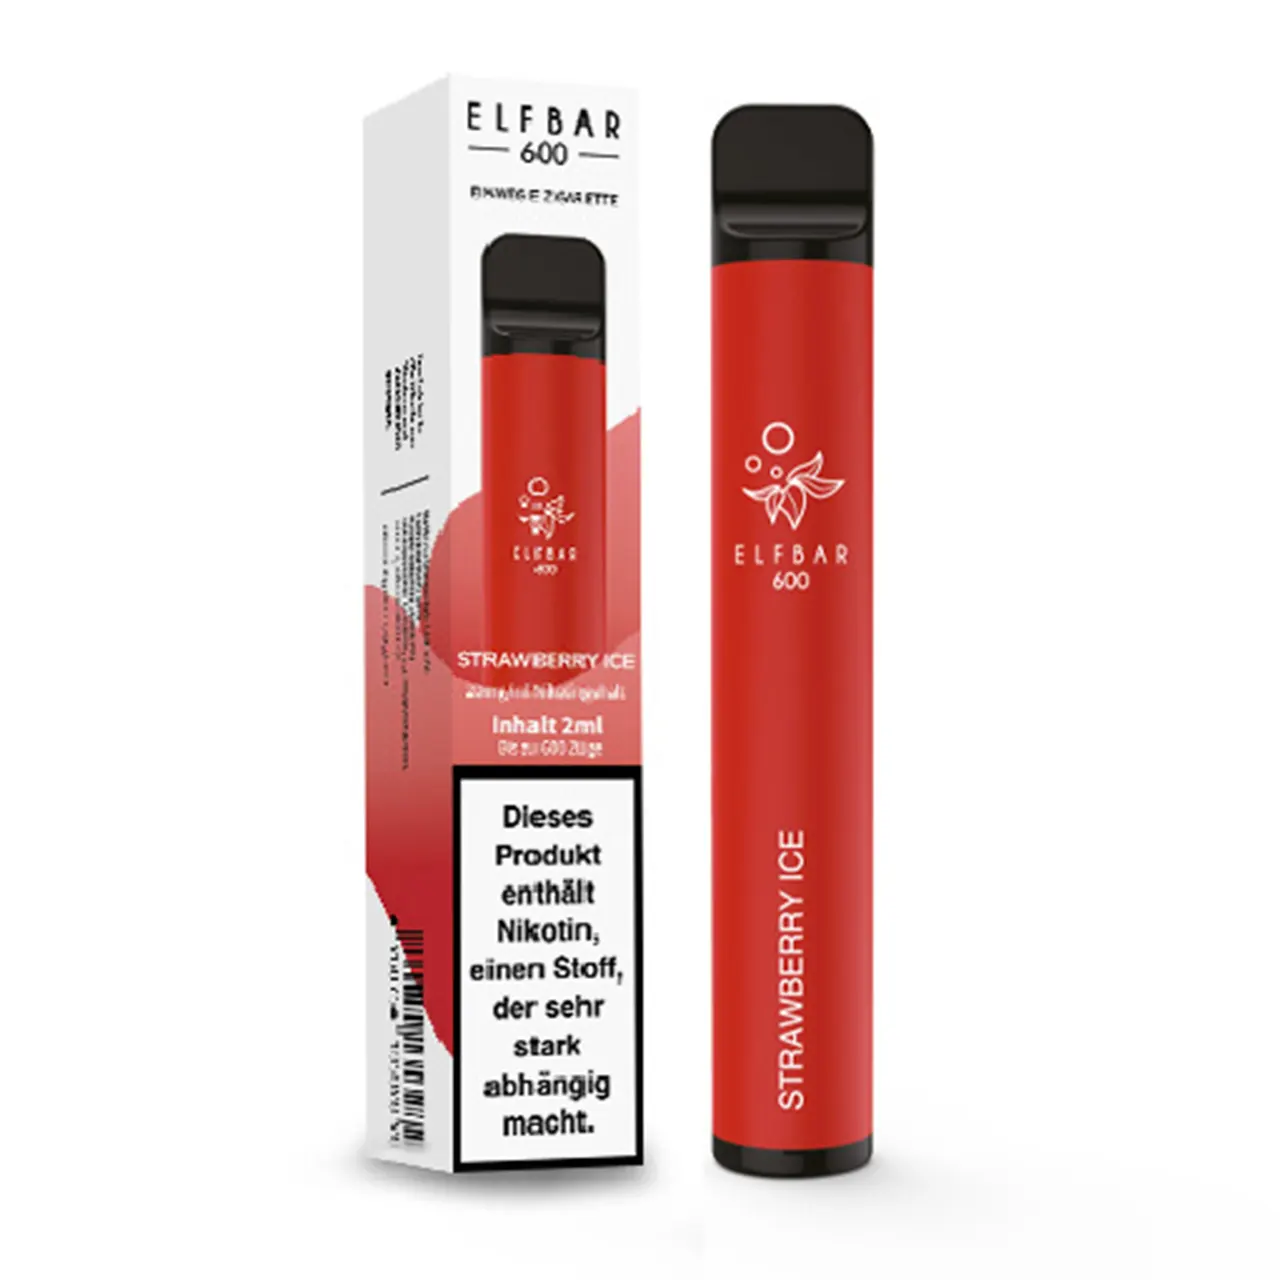 Elf Bar 600 Strawberry Kiwi Verpackung